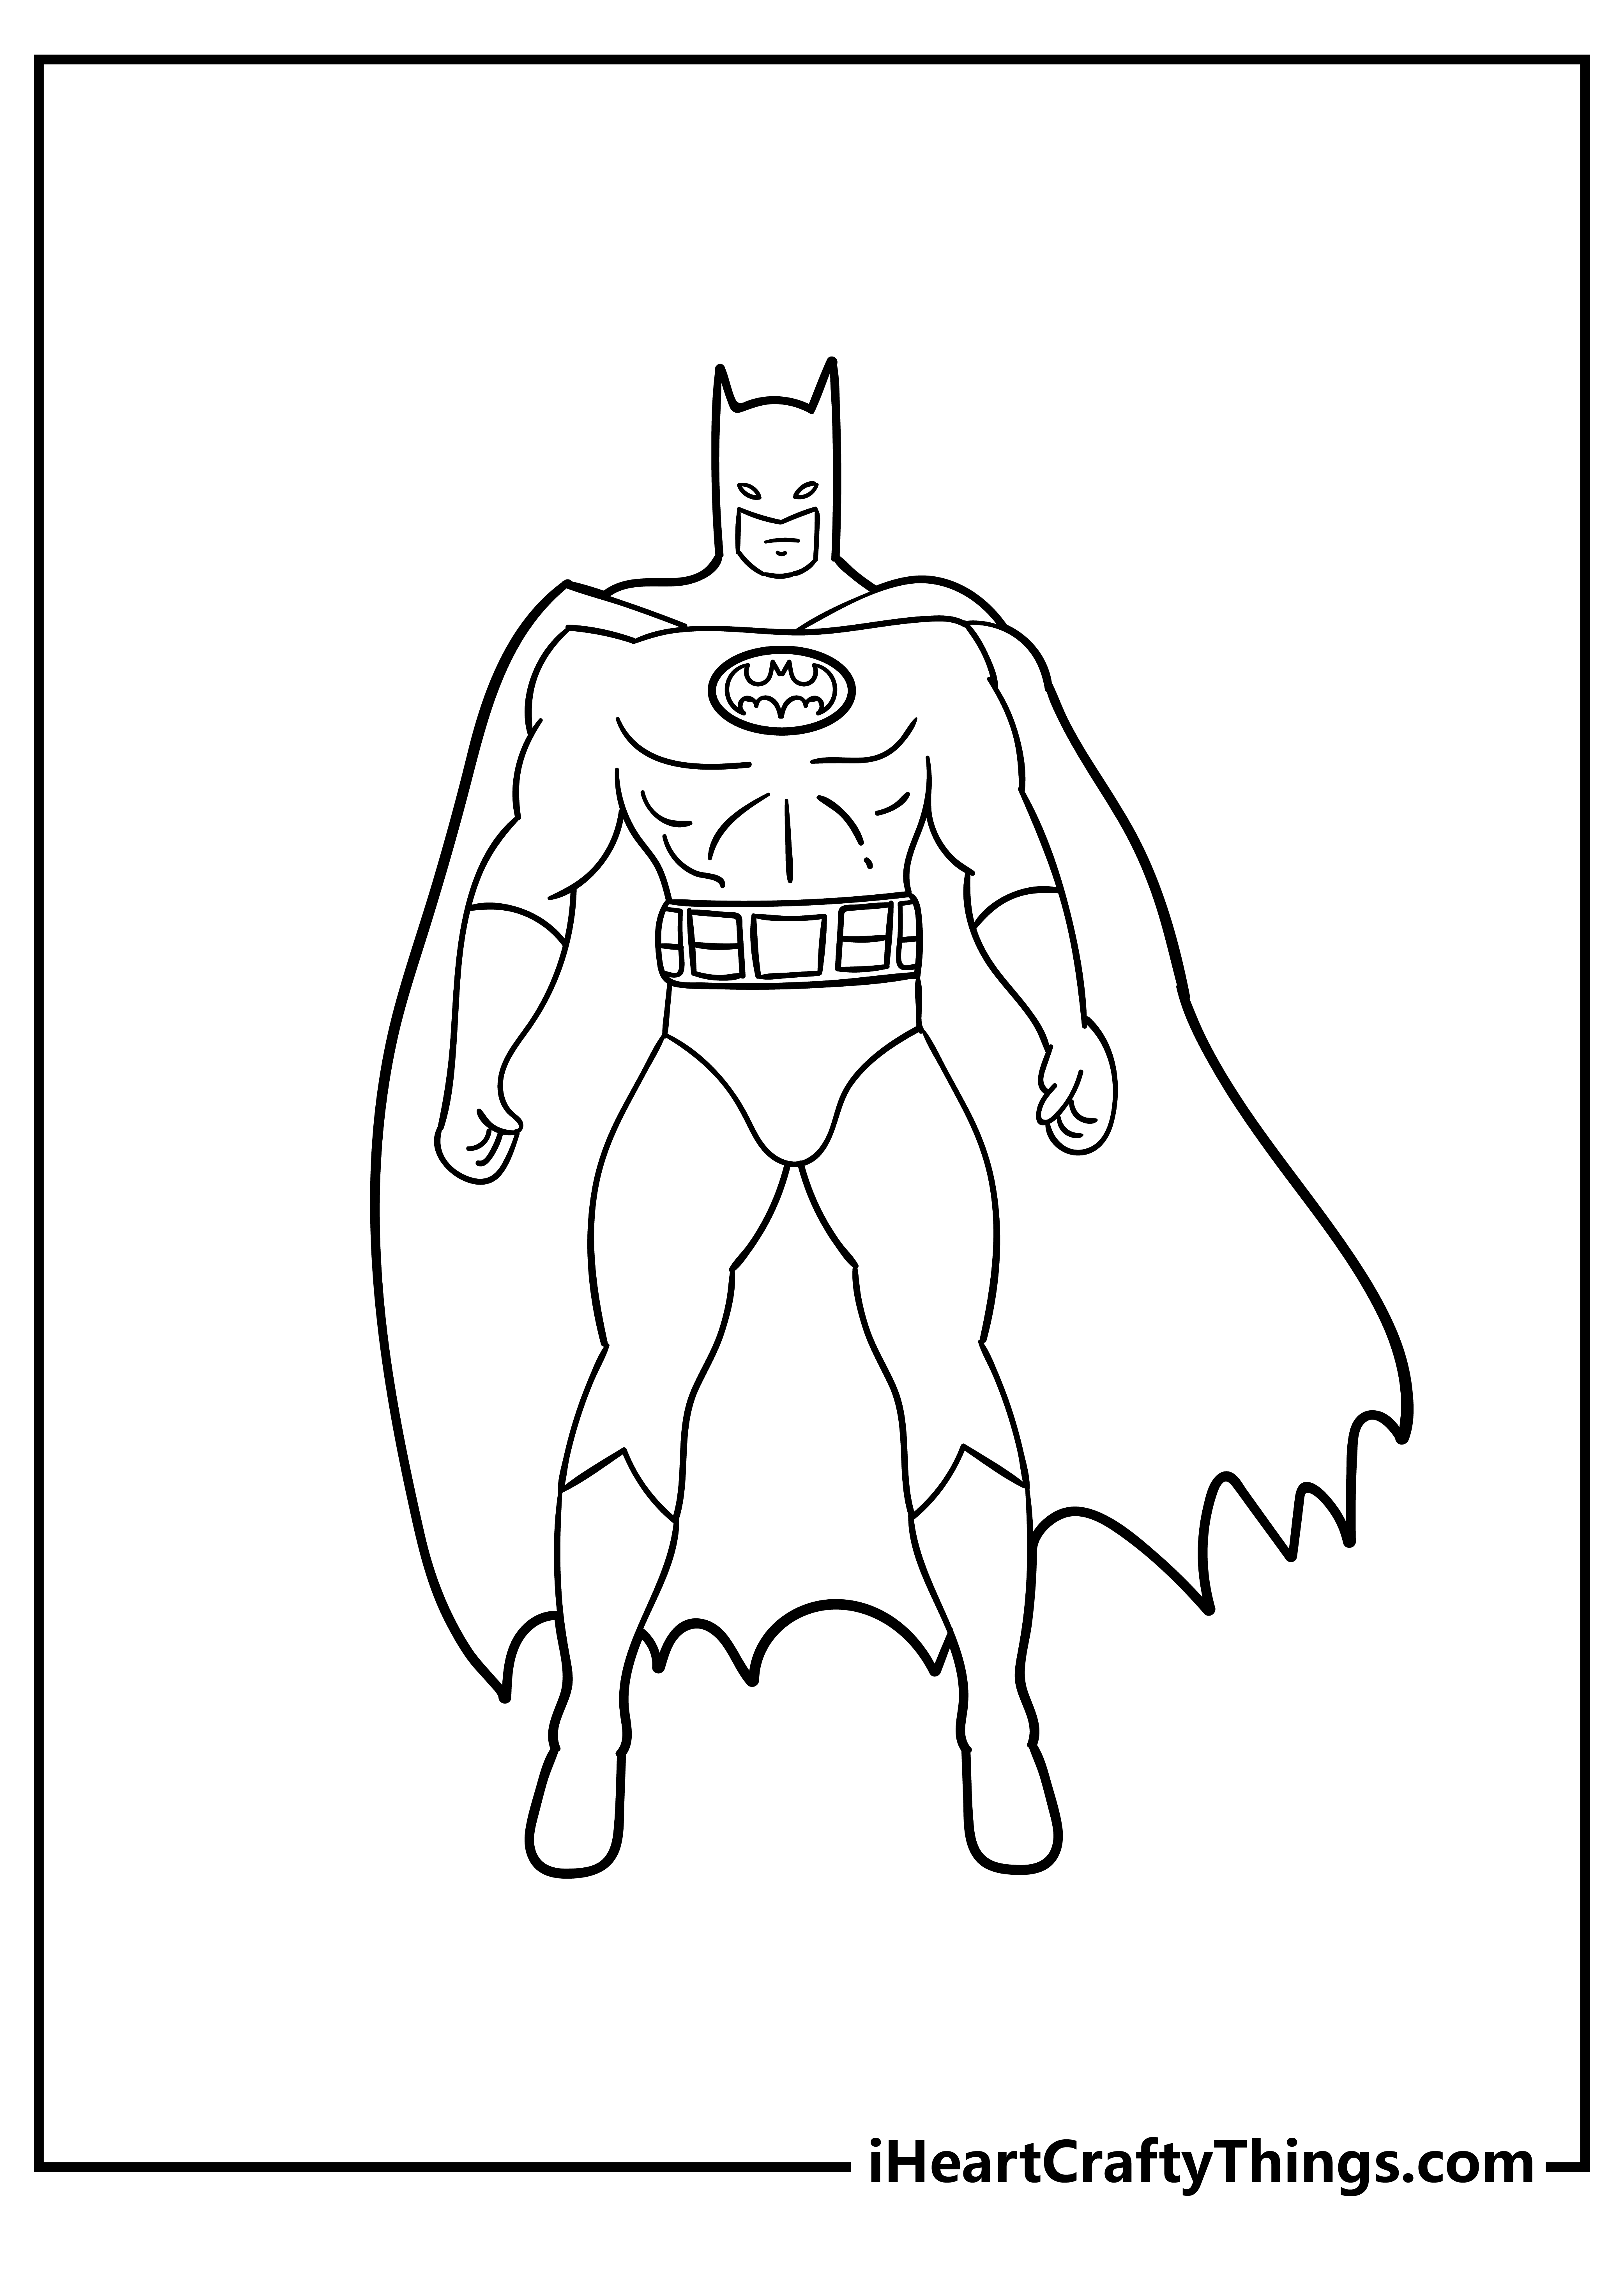 Batman Coloring Pages free pdf download